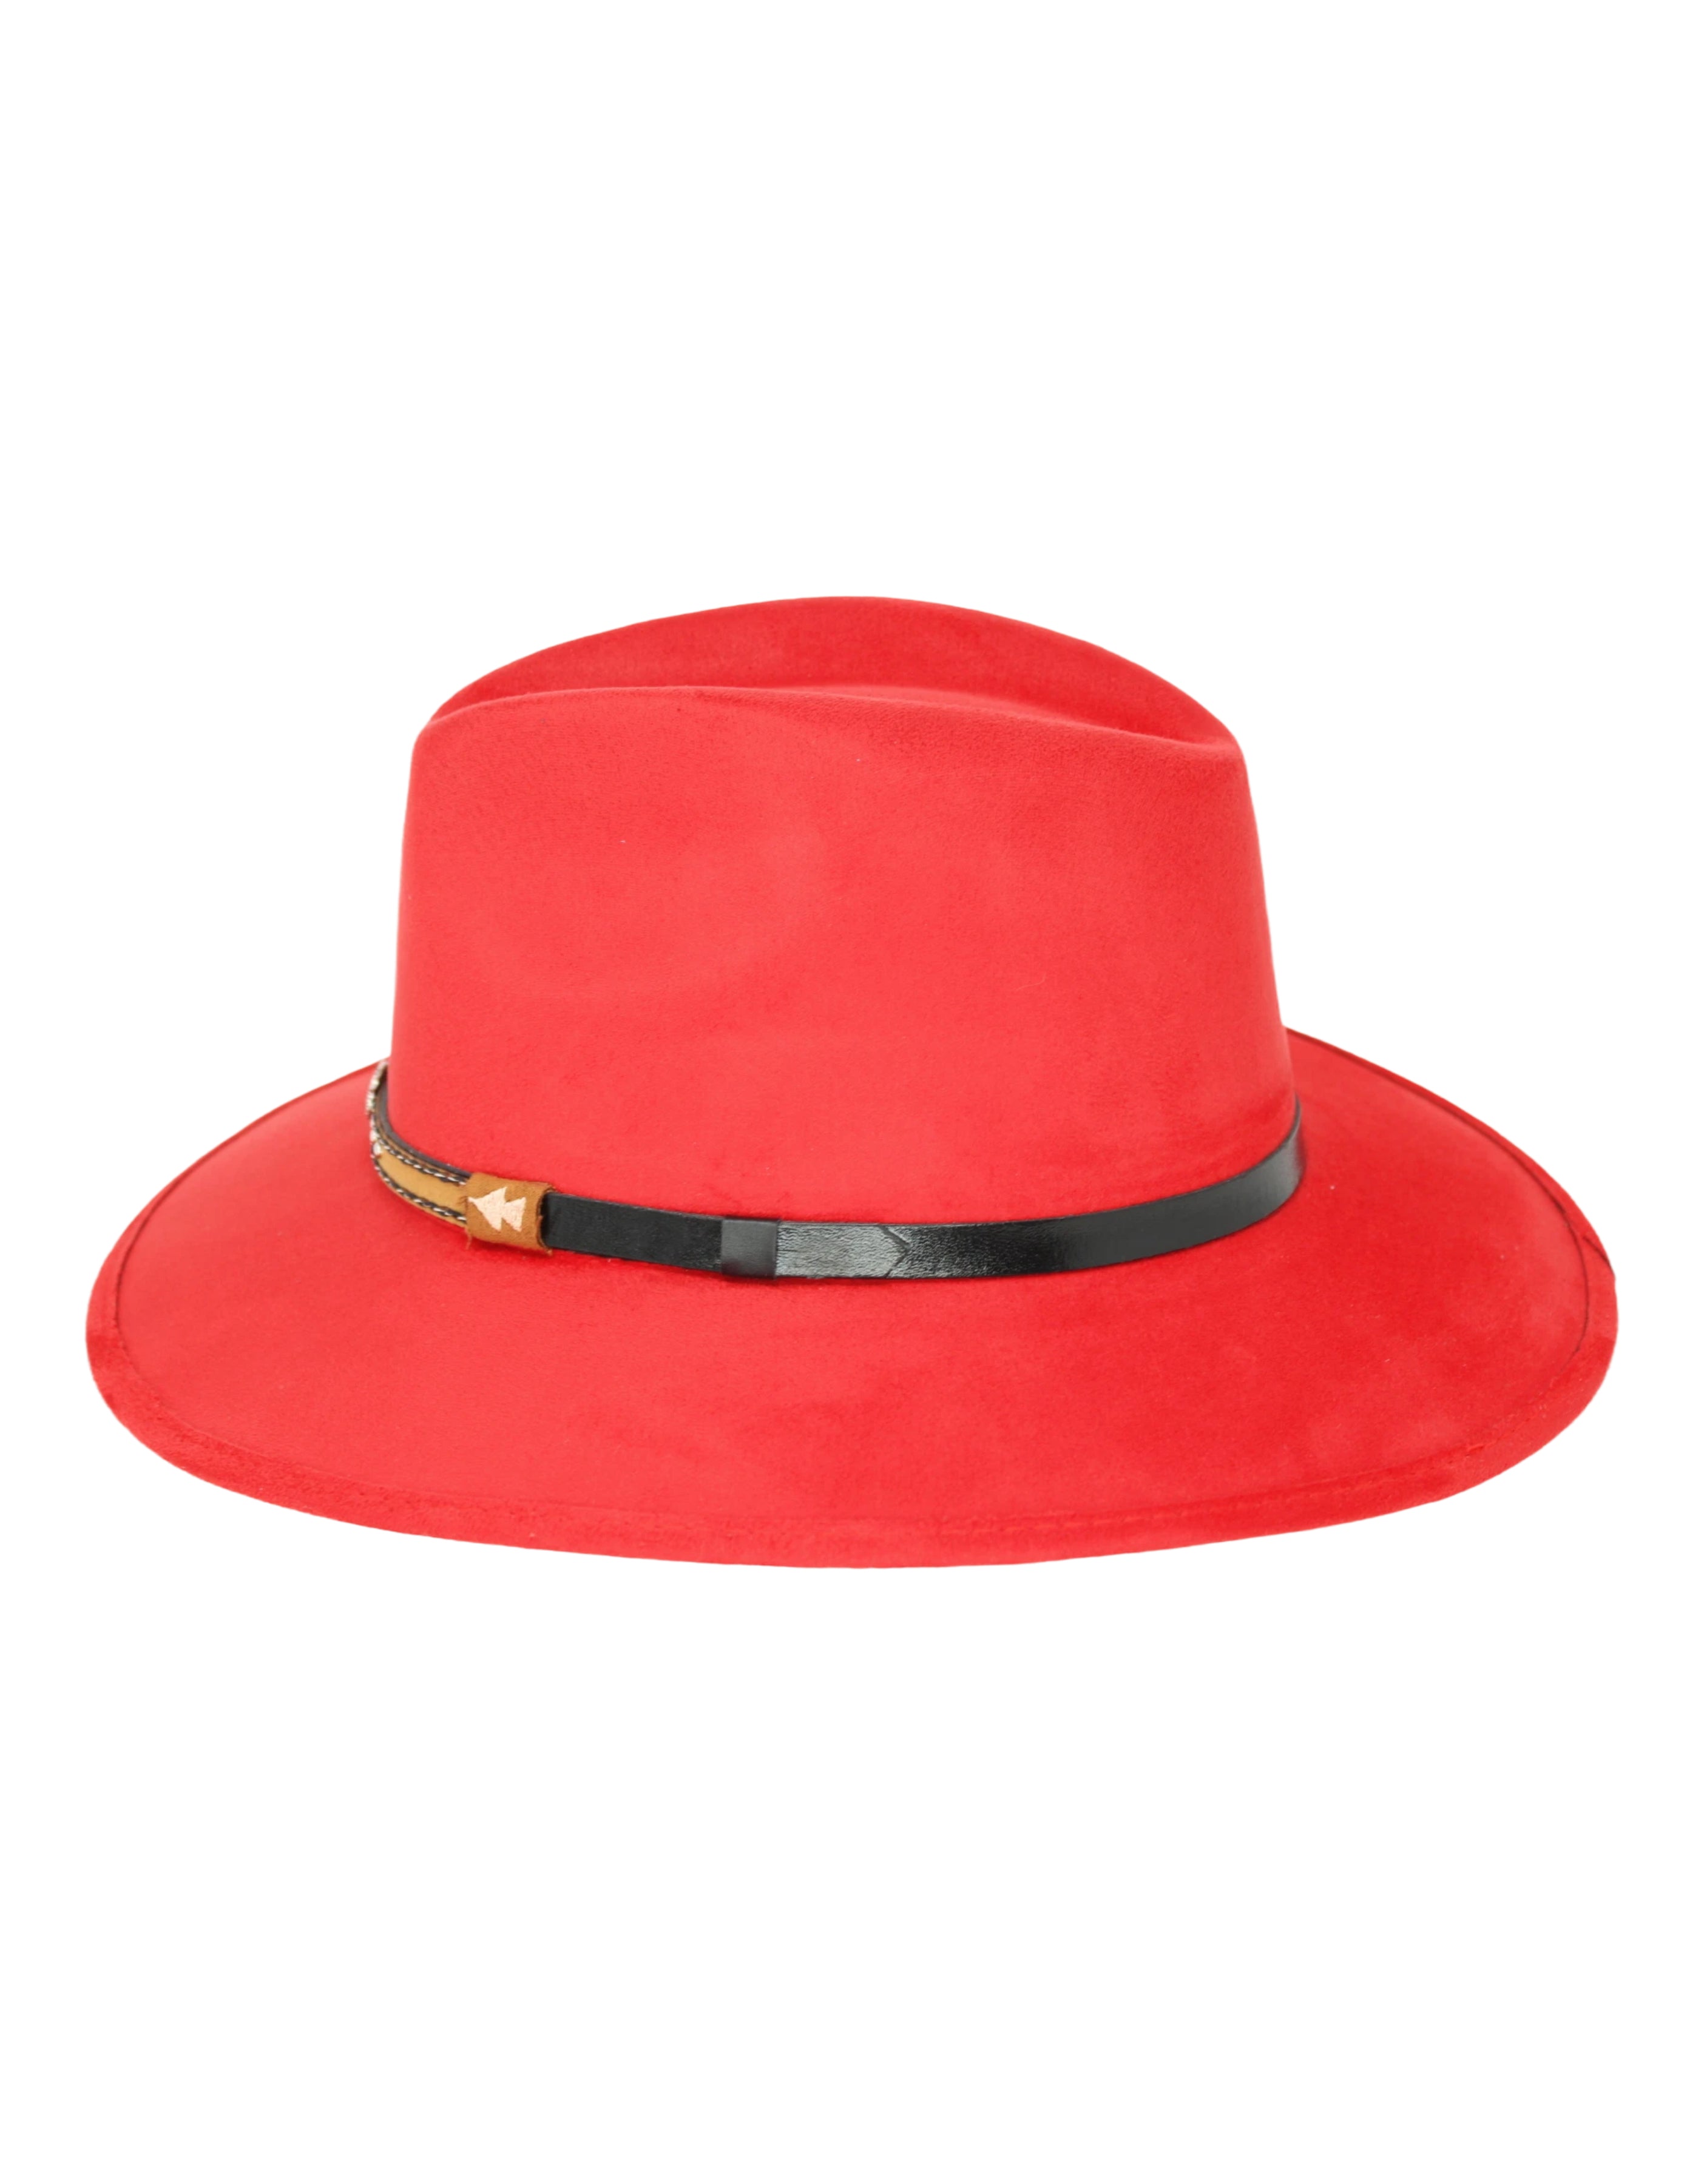 Harrison Indiana Suede Hat